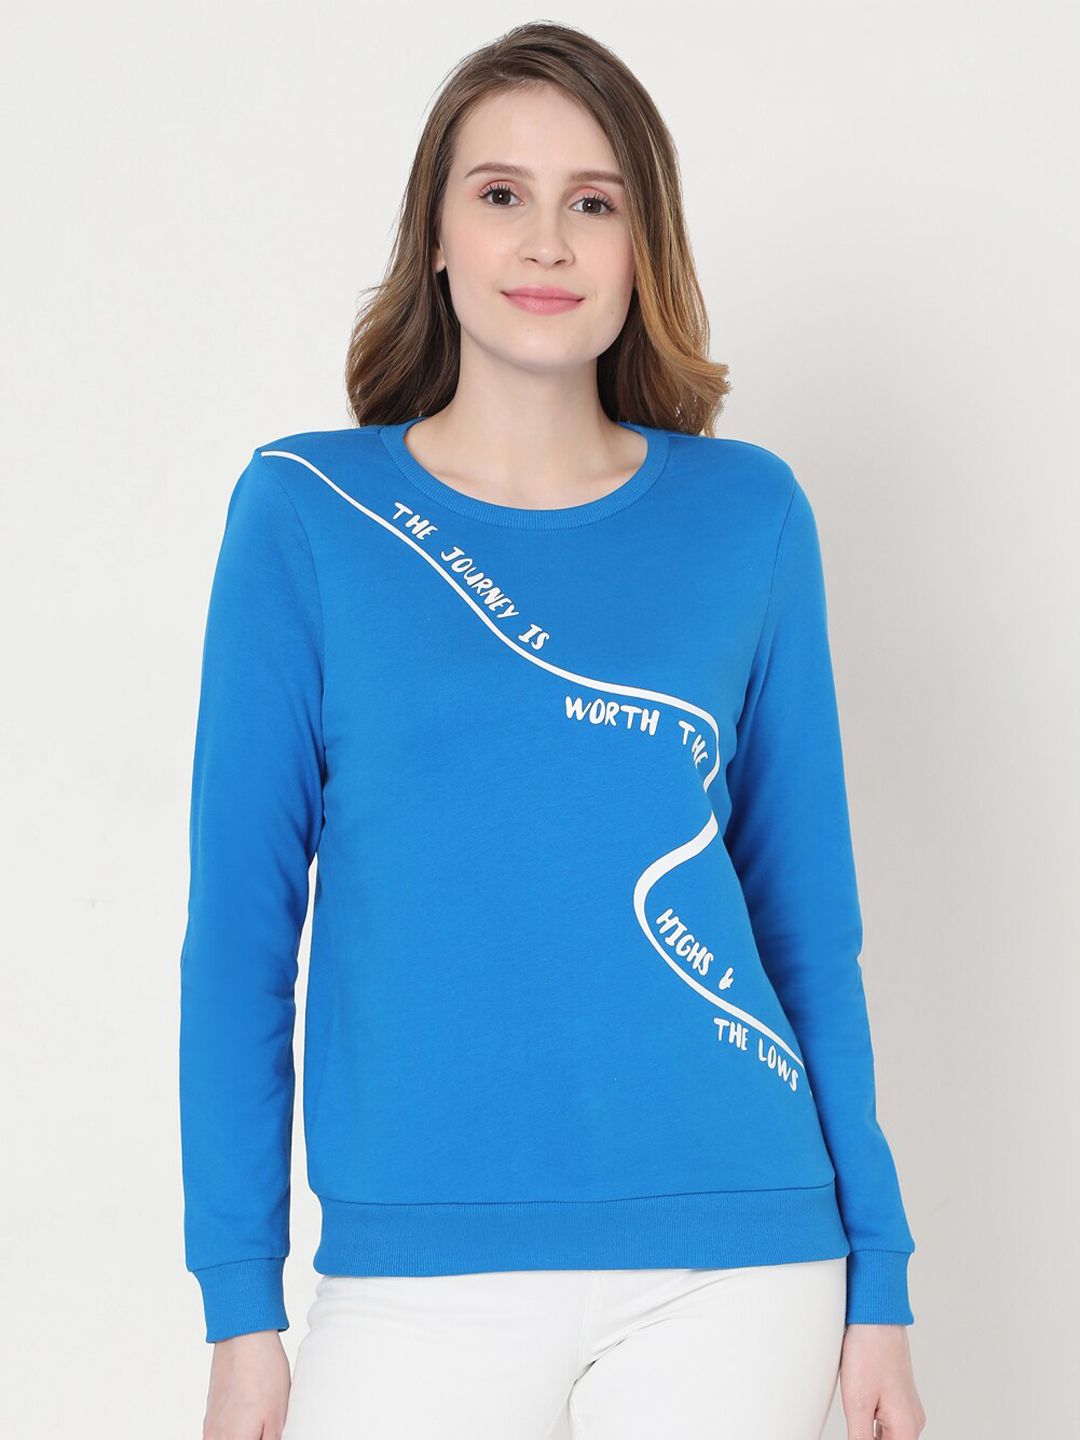 Vero Moda Women Blue Printed Cotton Sweatshirt Price in India